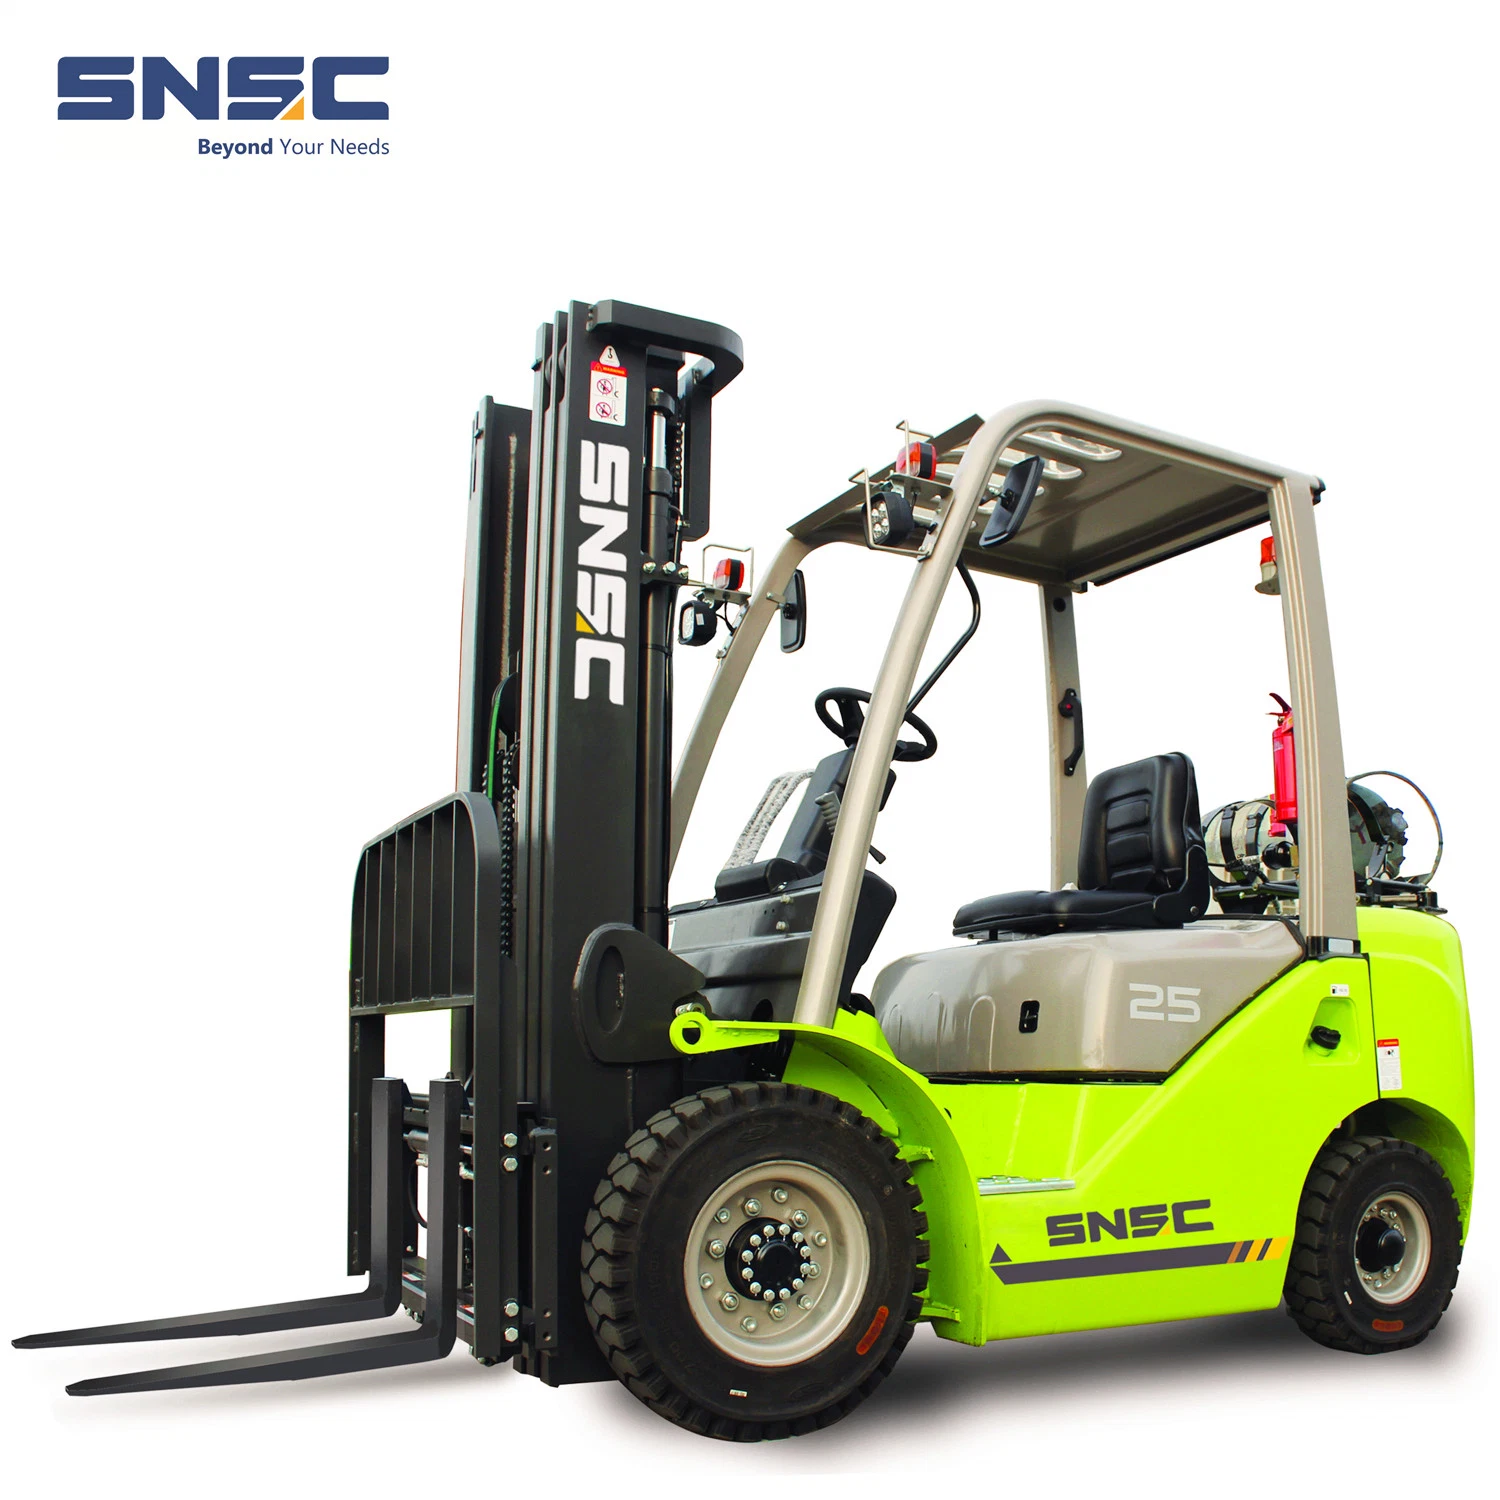 Snsc New 2.5 Ton LPG Gasoline Dual Fuel Propane Petrol Gas Forklift